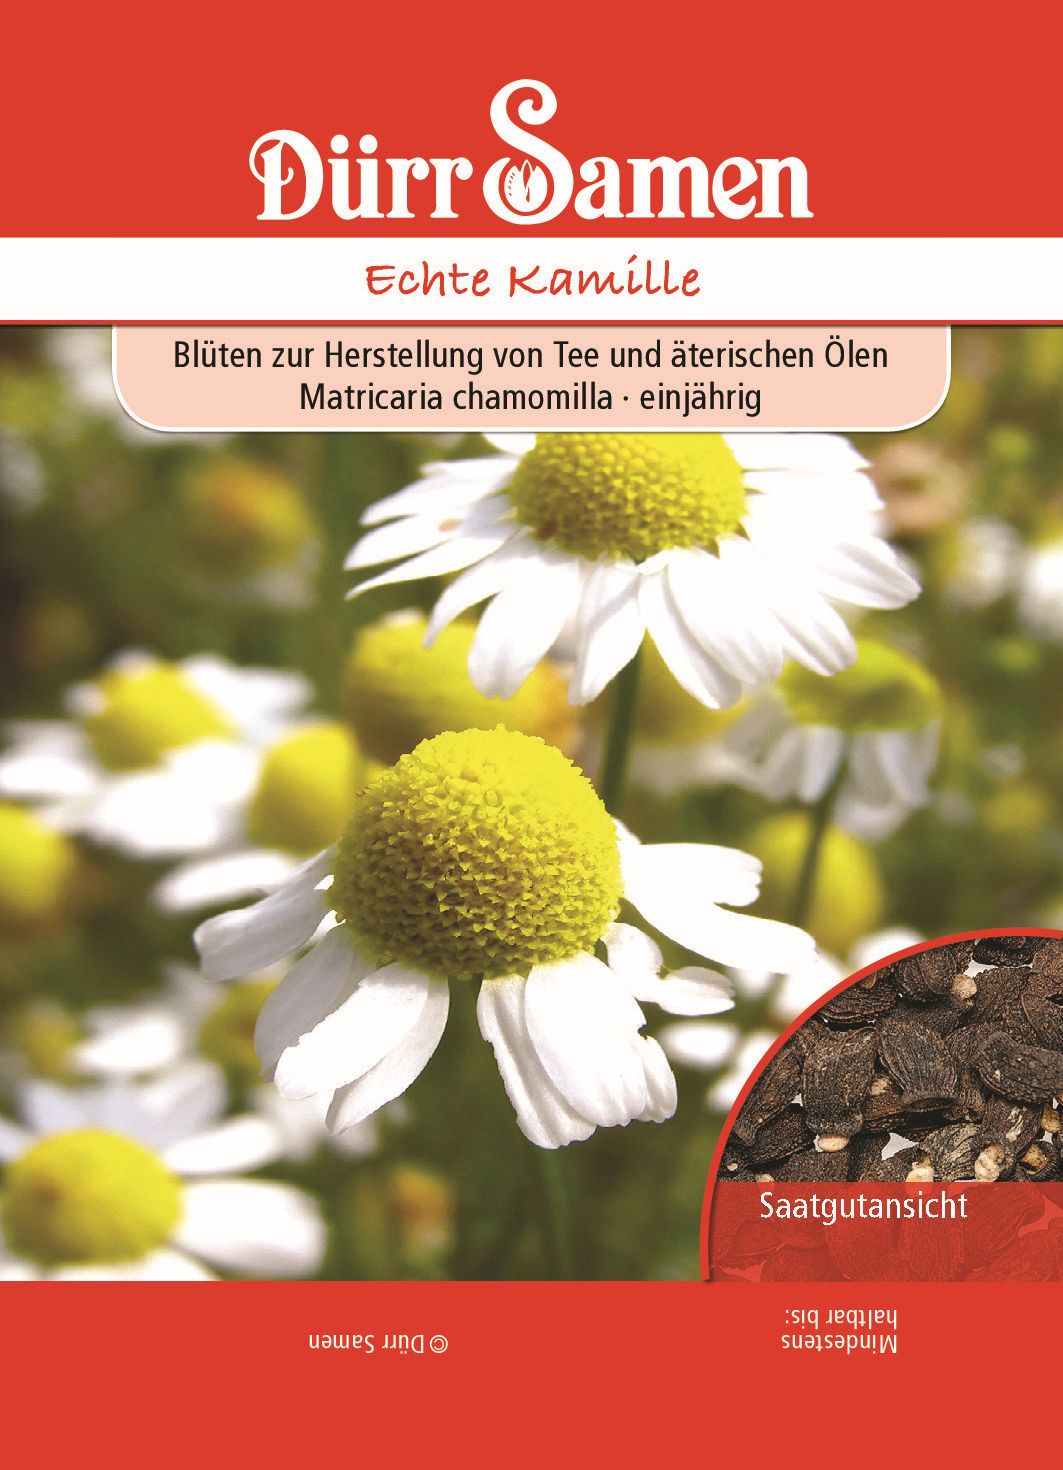 Echte Kamille, Matricaria chamomilla, Samen Dürr